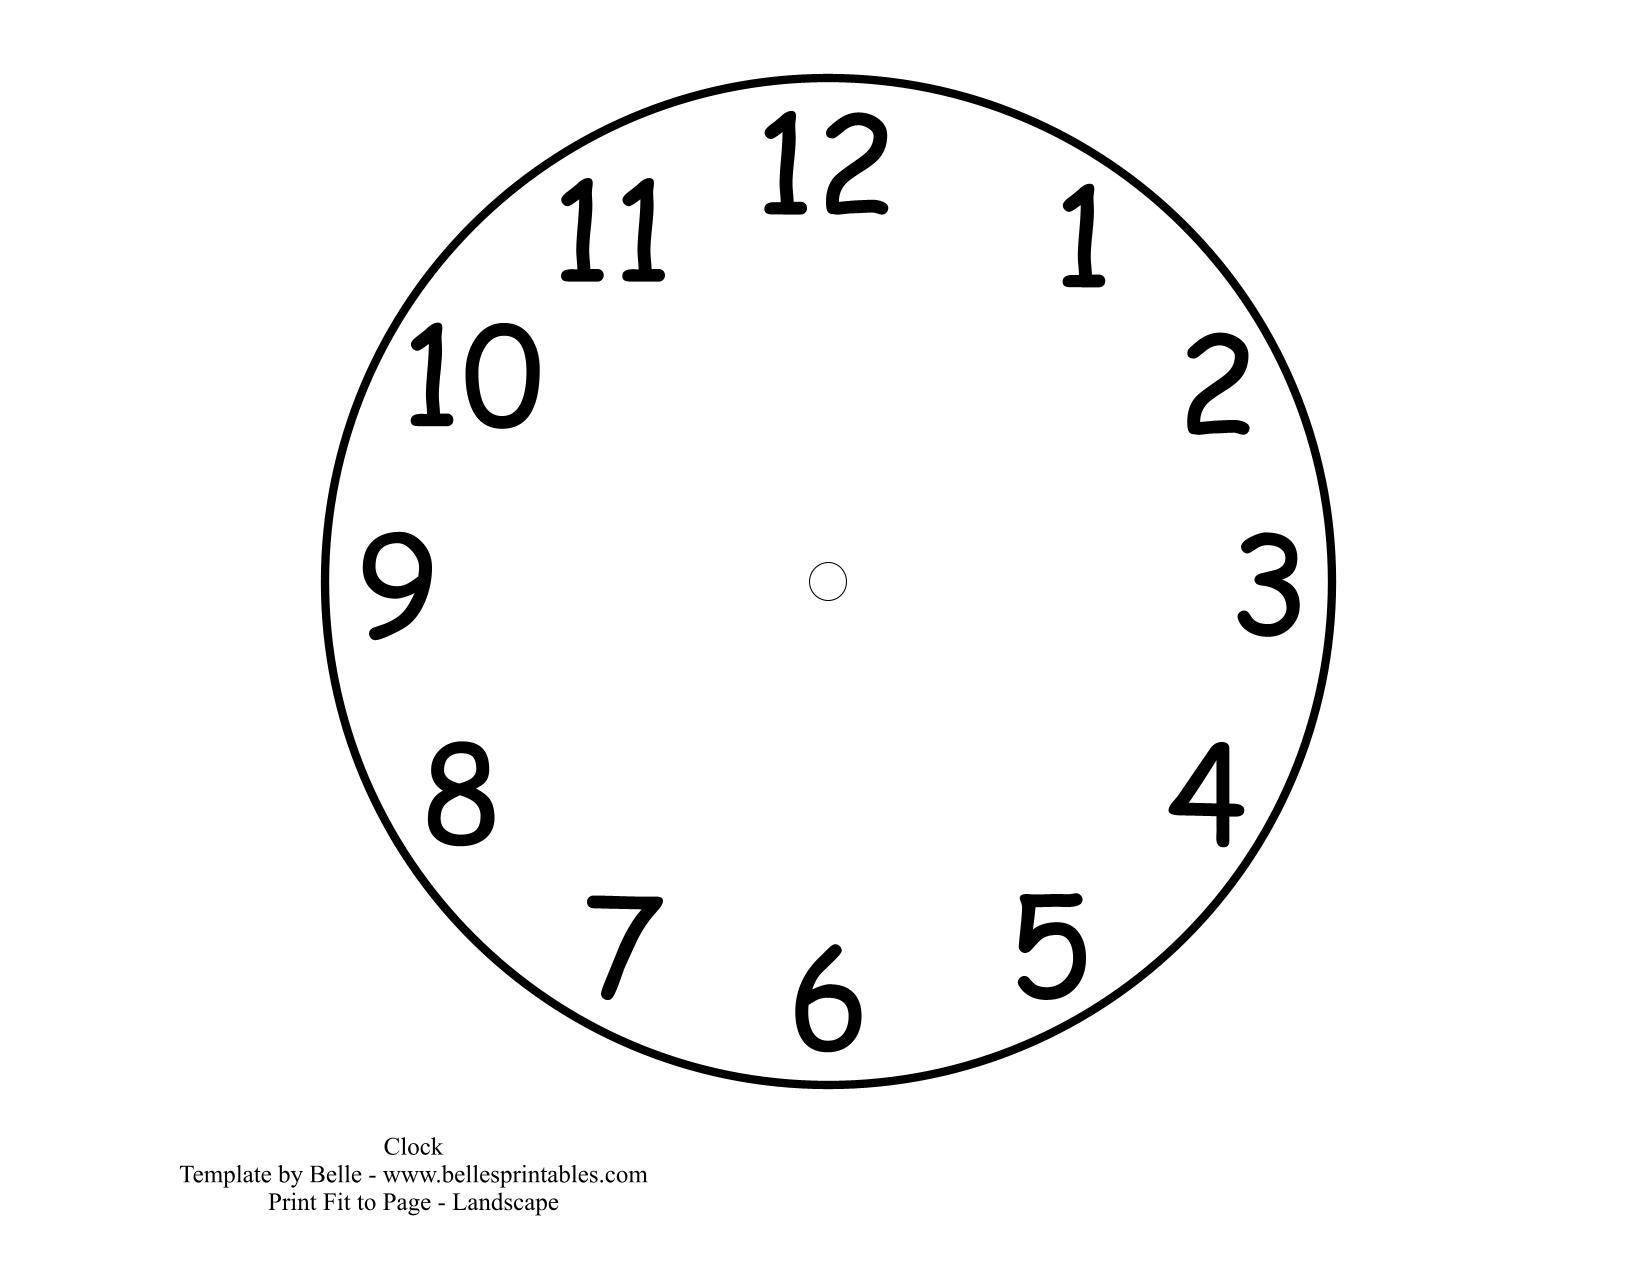 Циферблат 4 3. Циферблат часов. Макет часов для печати. Шаблон часов для детей. Макет часов для детей.